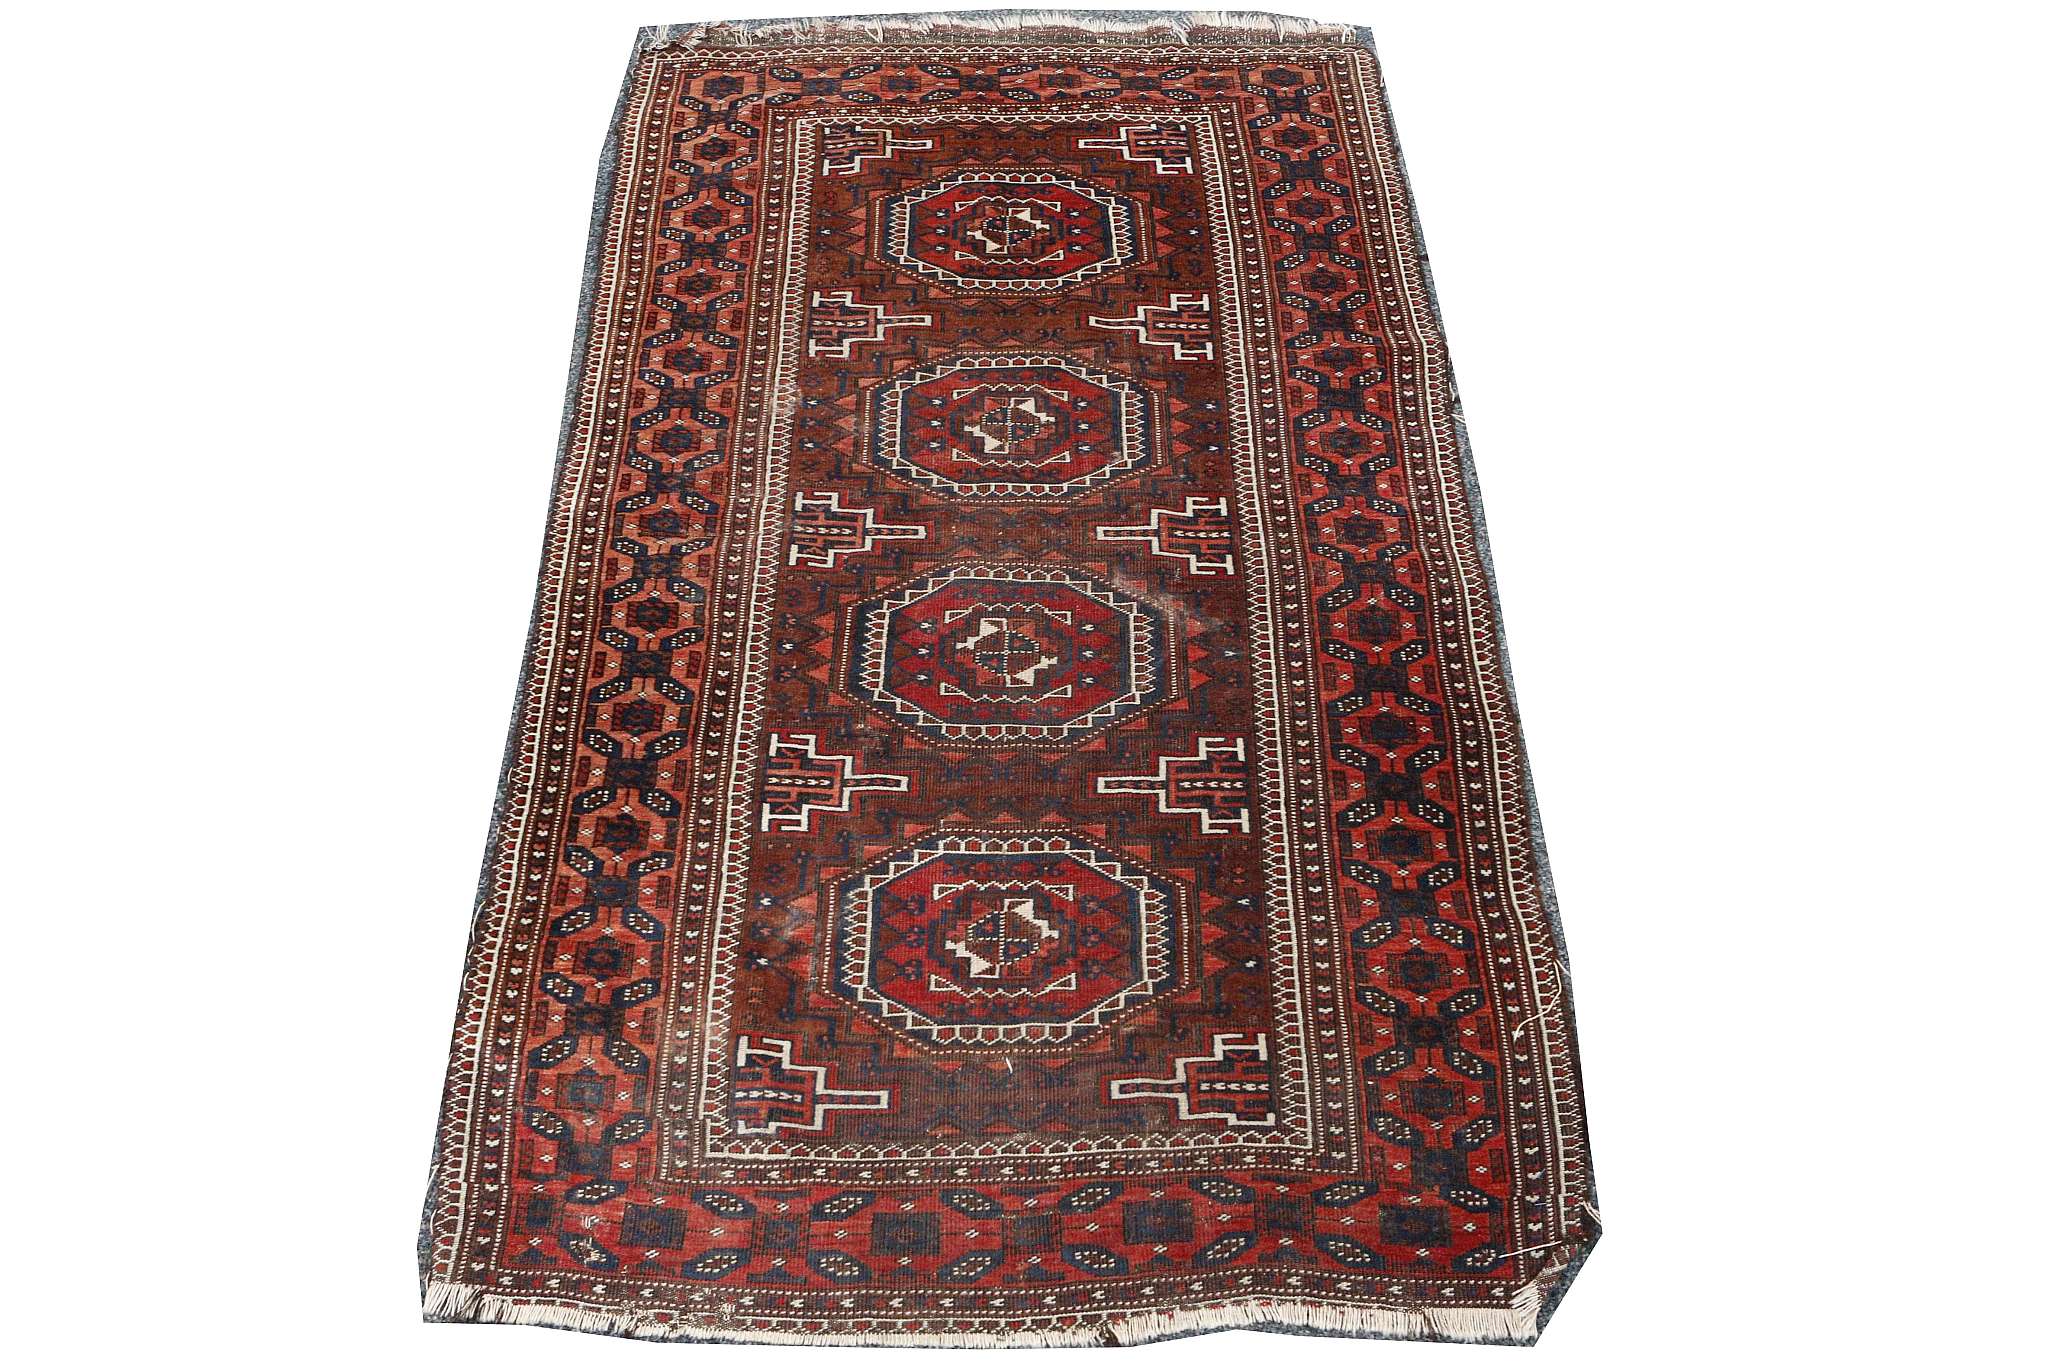 3 Rugs: 1 Moroccan kilim 1.60m x 1.45m, 1 Turkoman